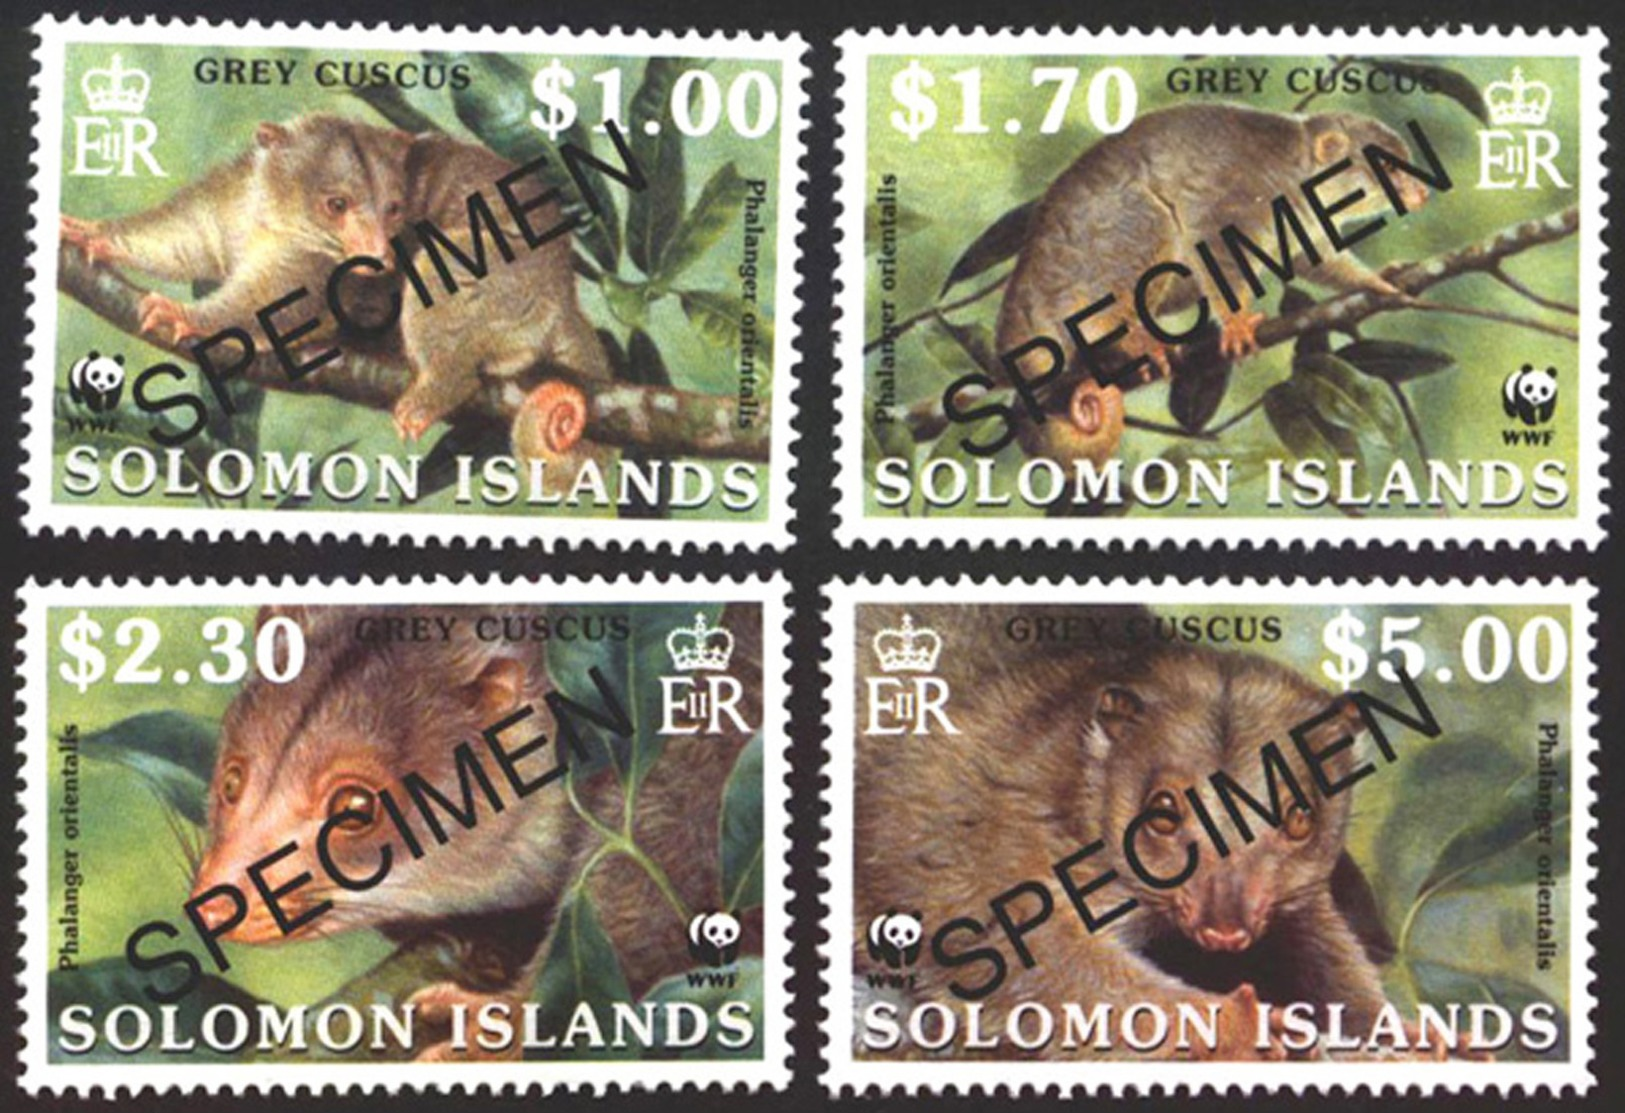 SOLOMON ISLANDS STAMPS, SET @F 4, FAUNA, WWF, SPECIMEN, MNH - Solomon Islands (1978-...)